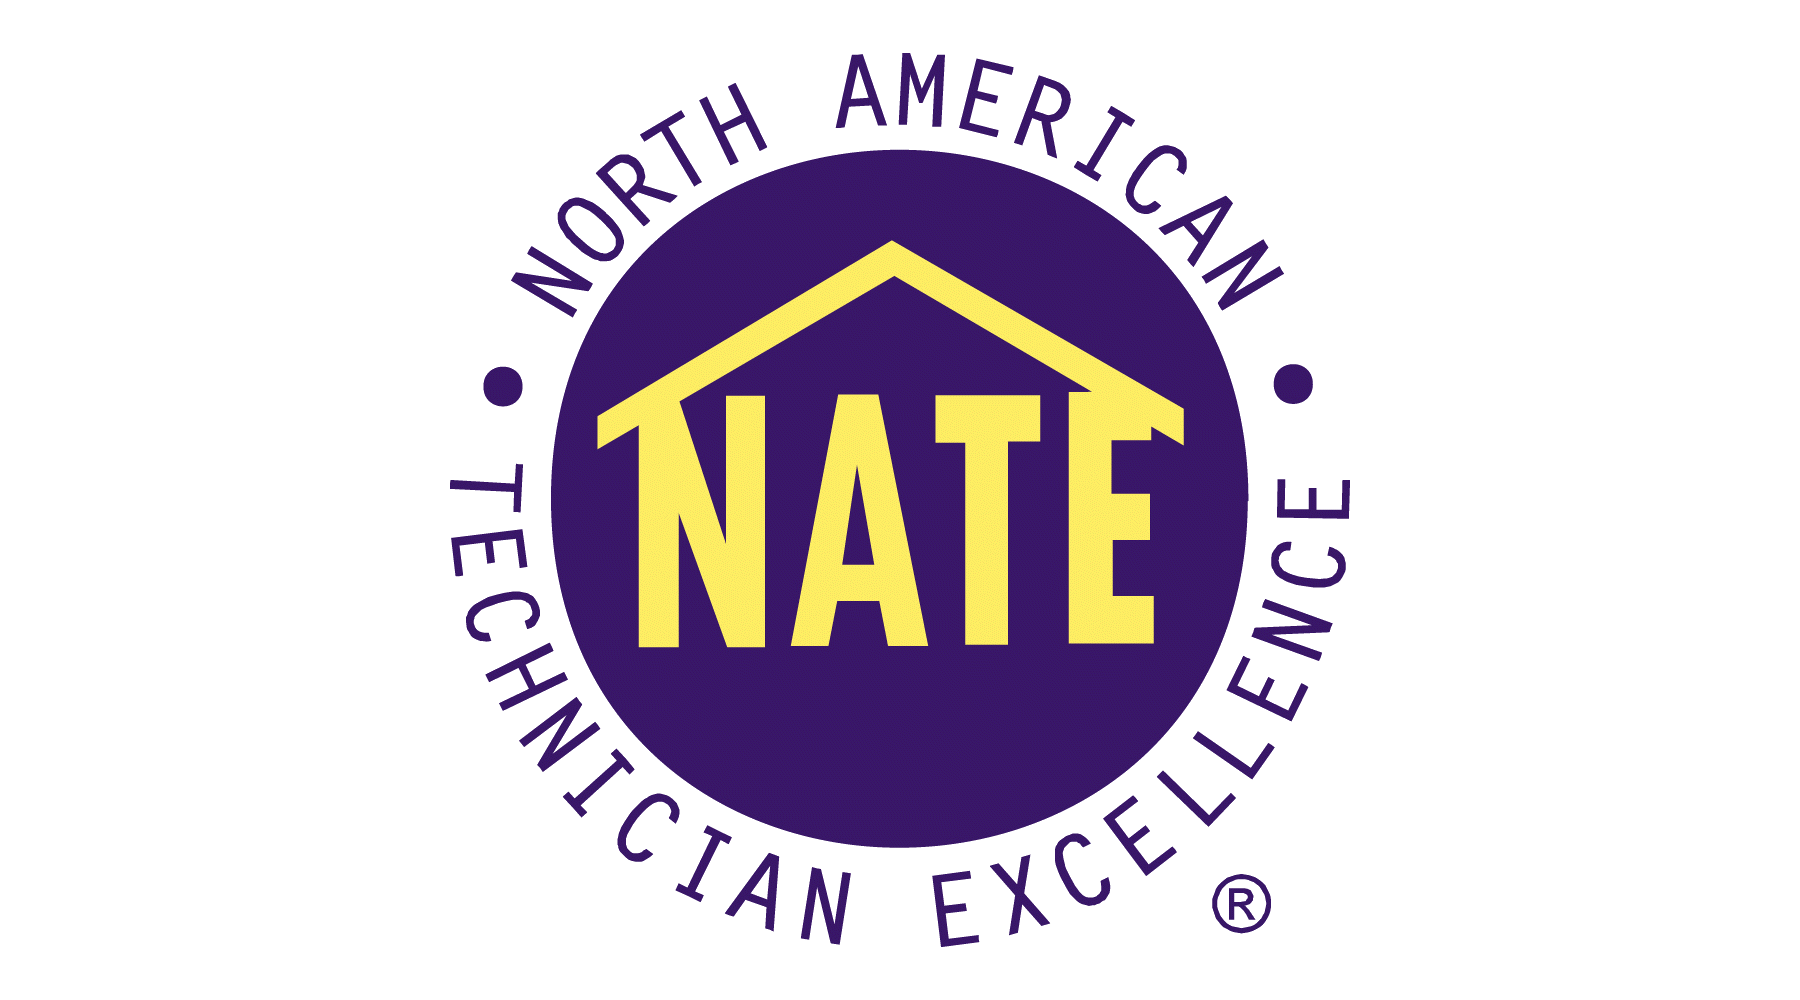 Nate Certified Technicians